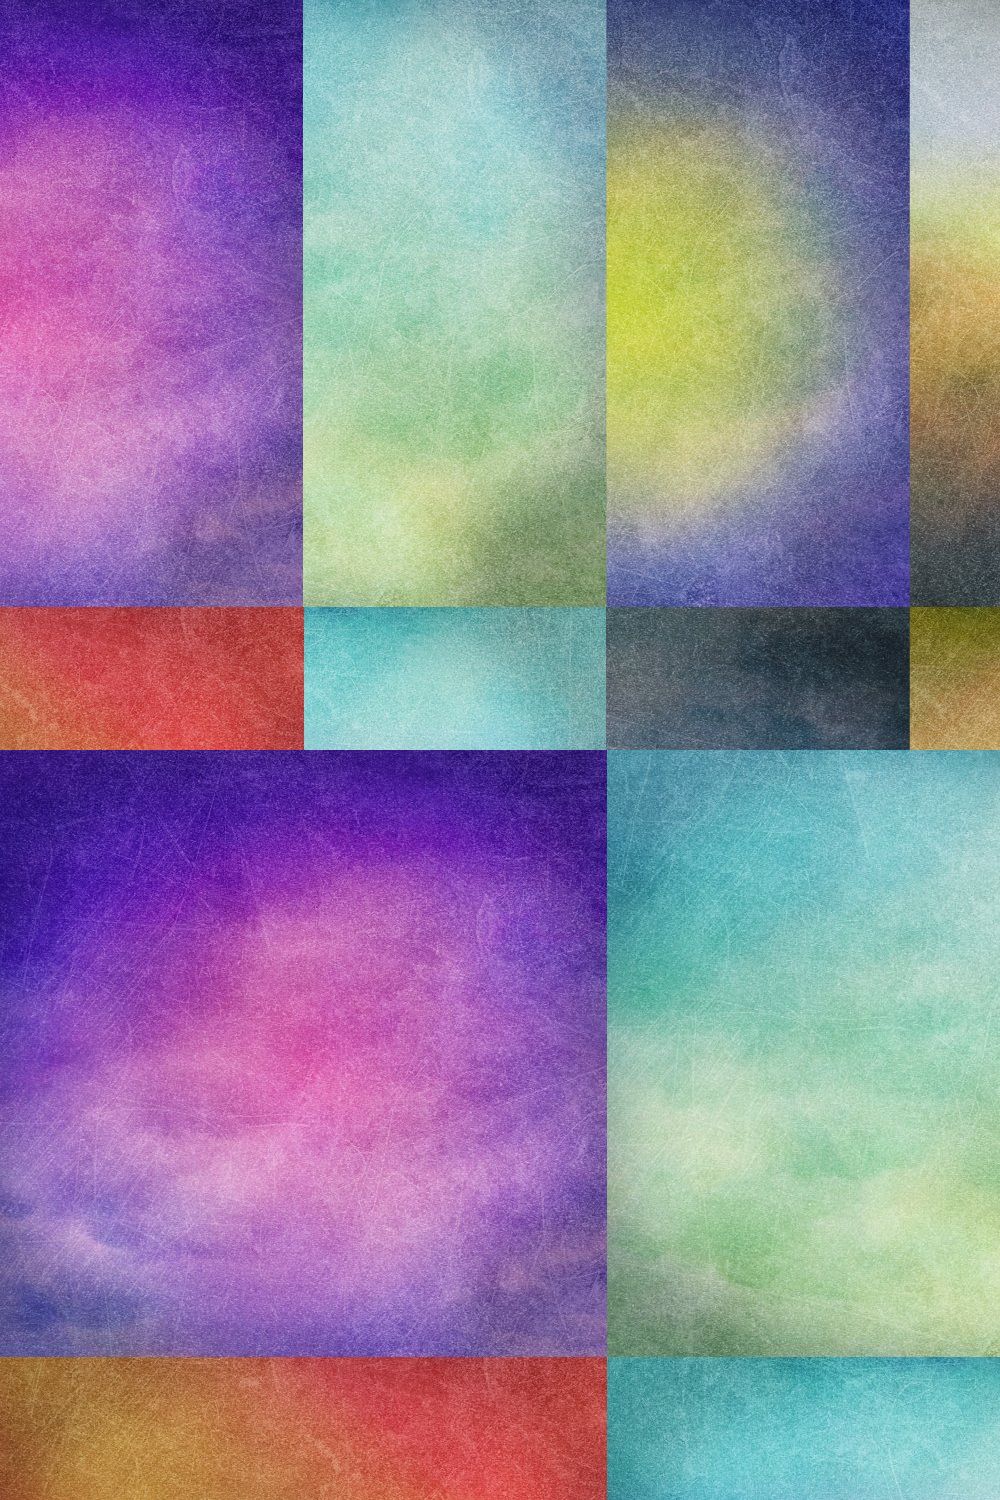 Set of 12 Grunge Gradient Textures pinterest preview image.